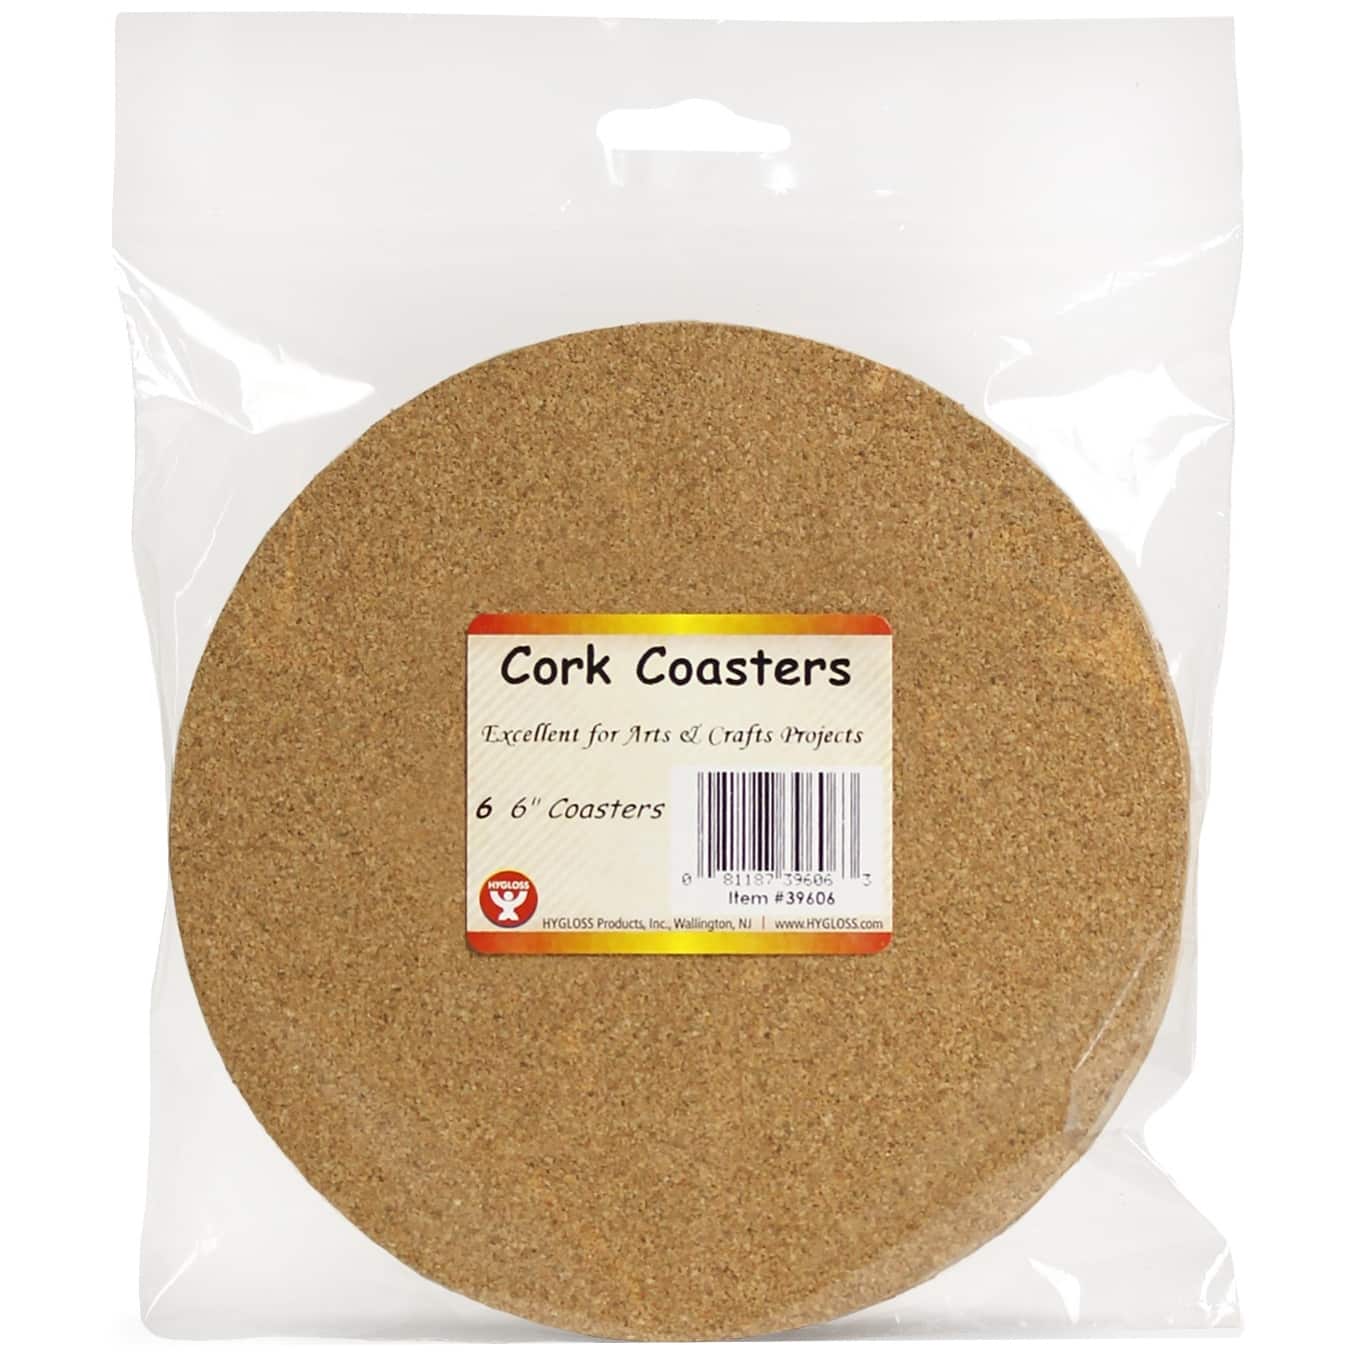 Hygloss 6 Cork Coasters, 6